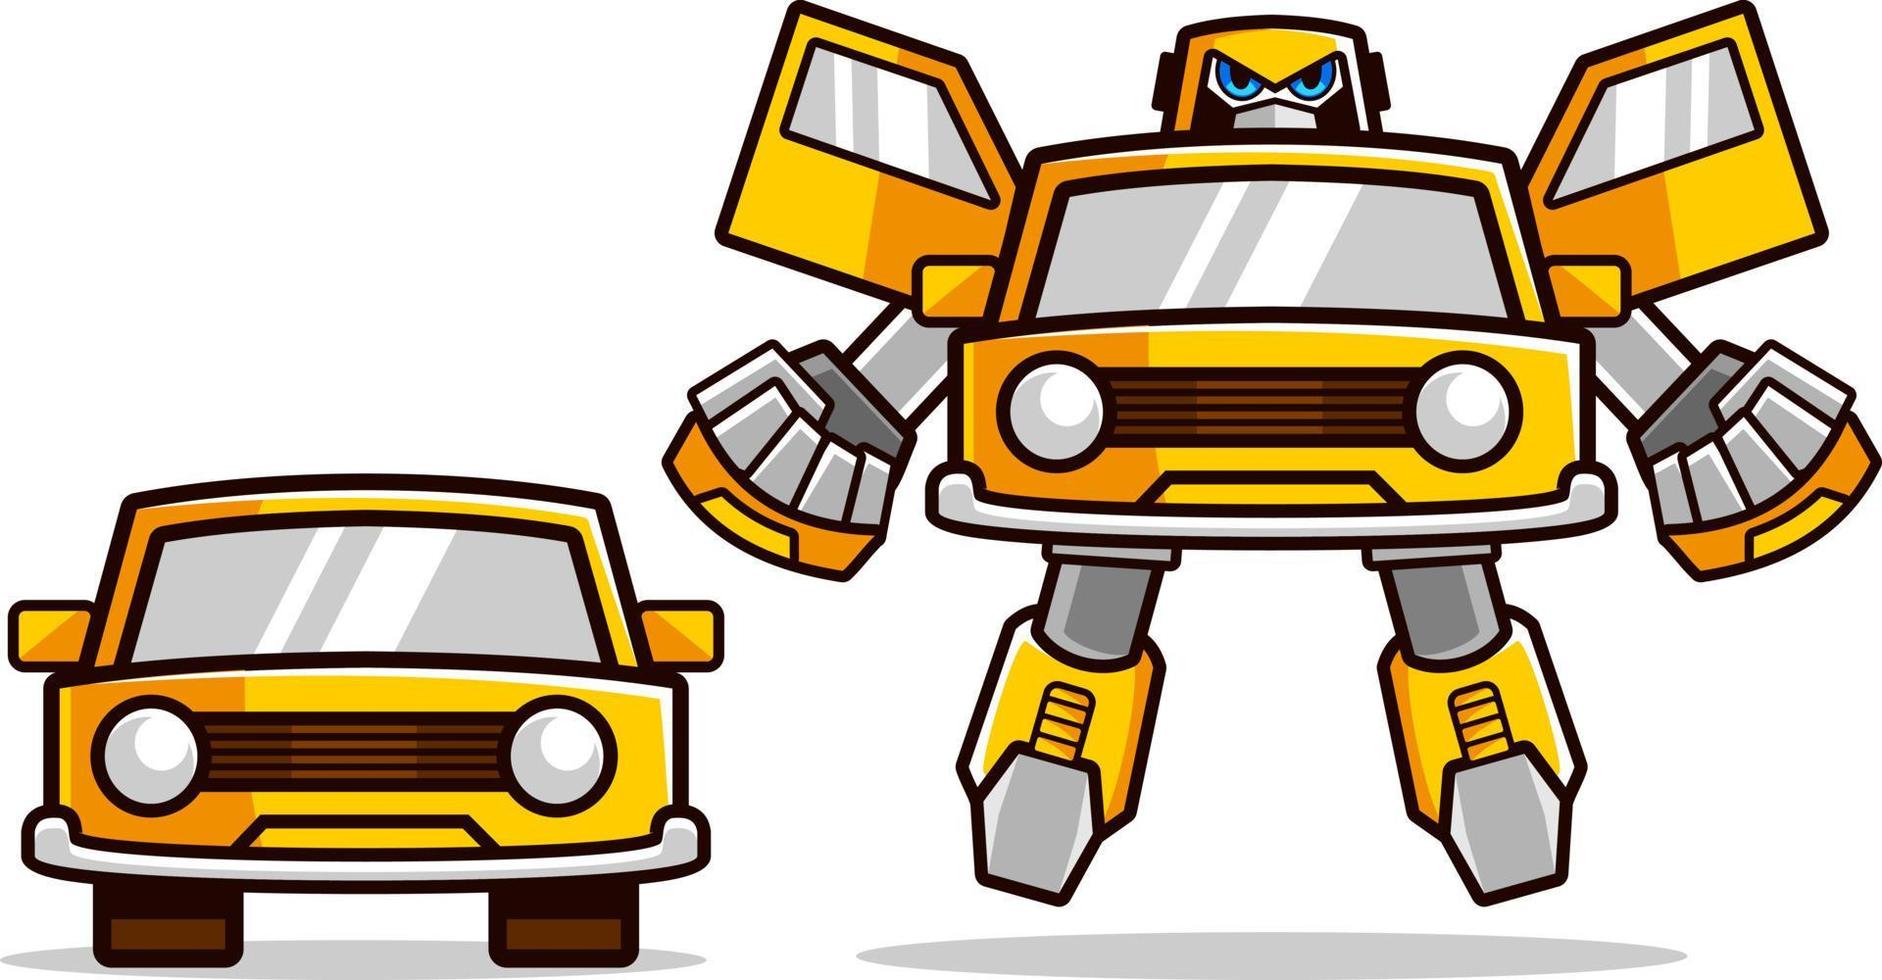 Yellow Robot Taxi Car transform and fly vector